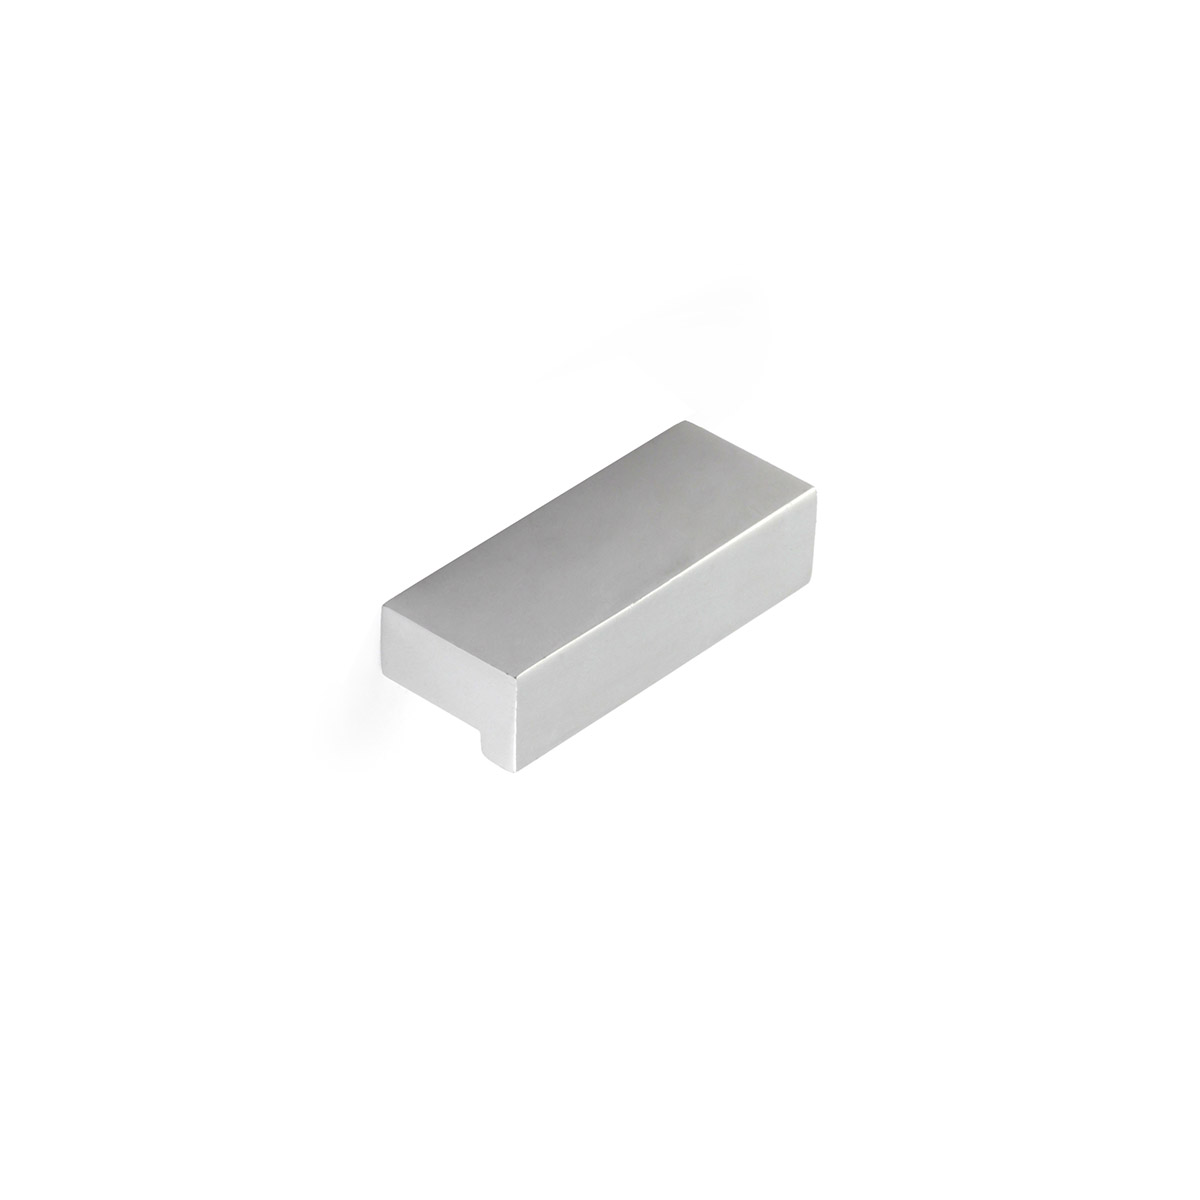 Asa de aluminio con acabado anodizado mate, dimensiones:44x12x18mm ADHESIVO